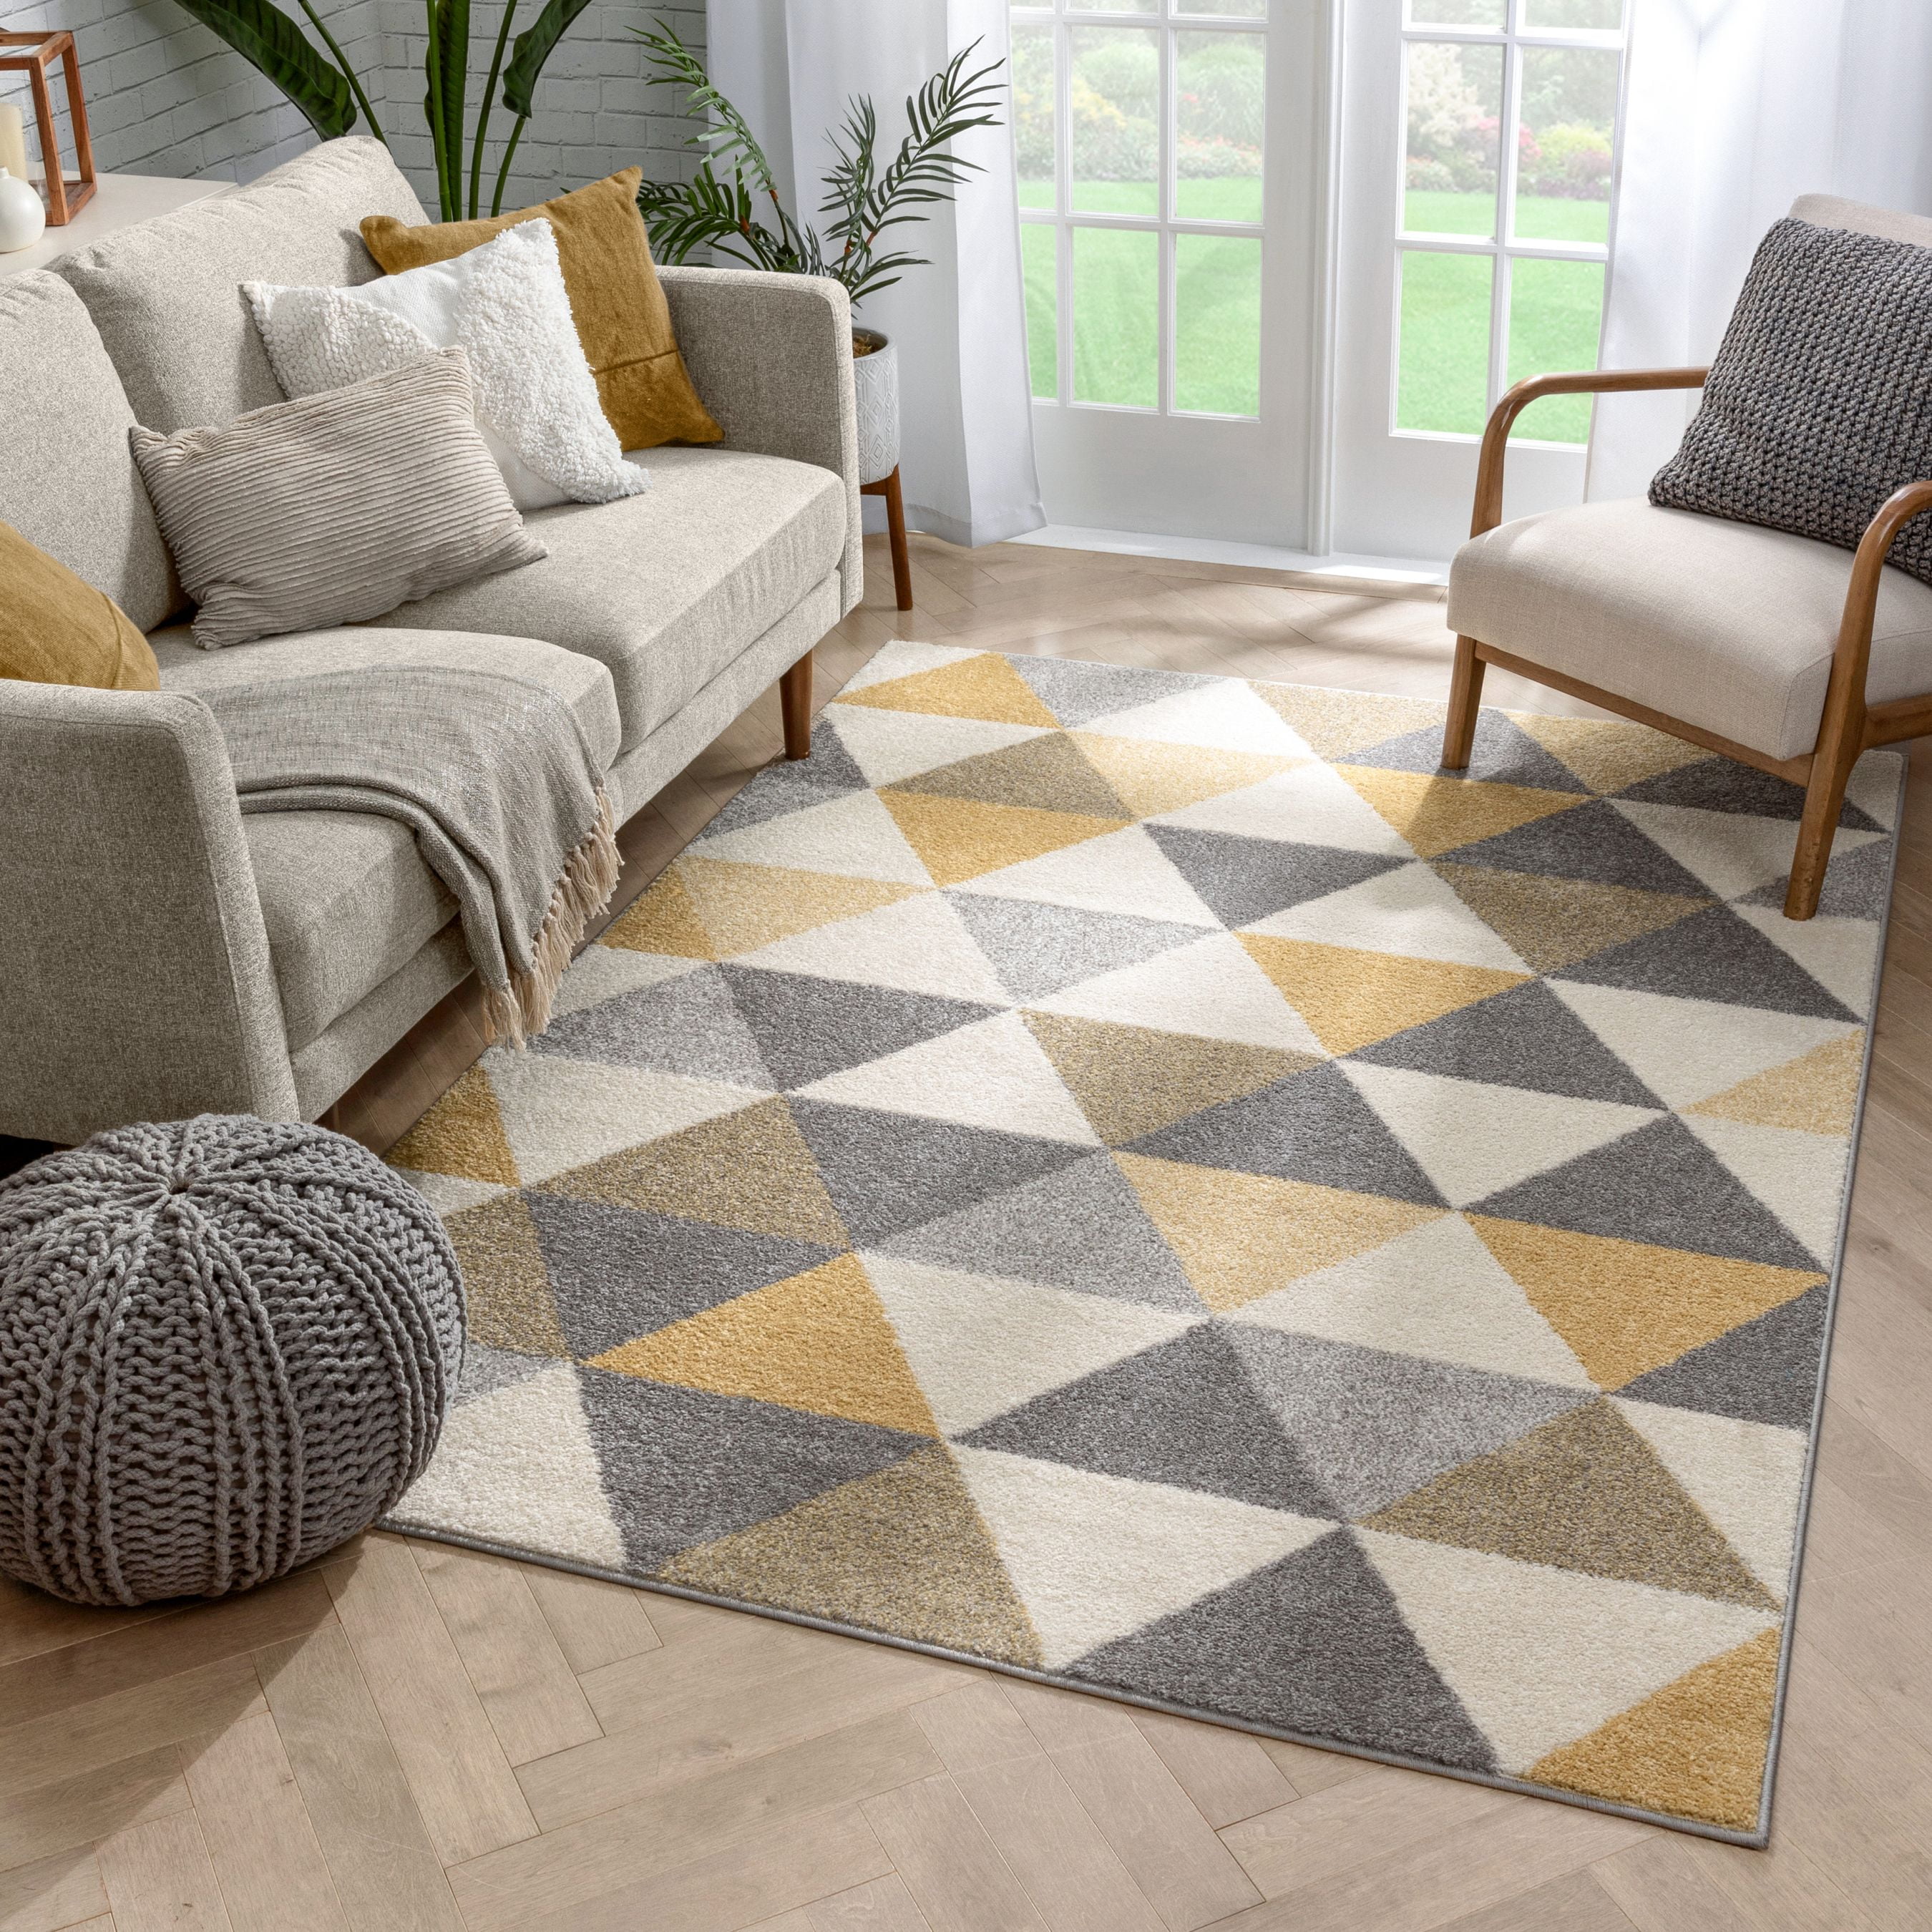 Pet yarn grey rug 5x7 modern jacquard loom scandinavian geometric room size one of a kind